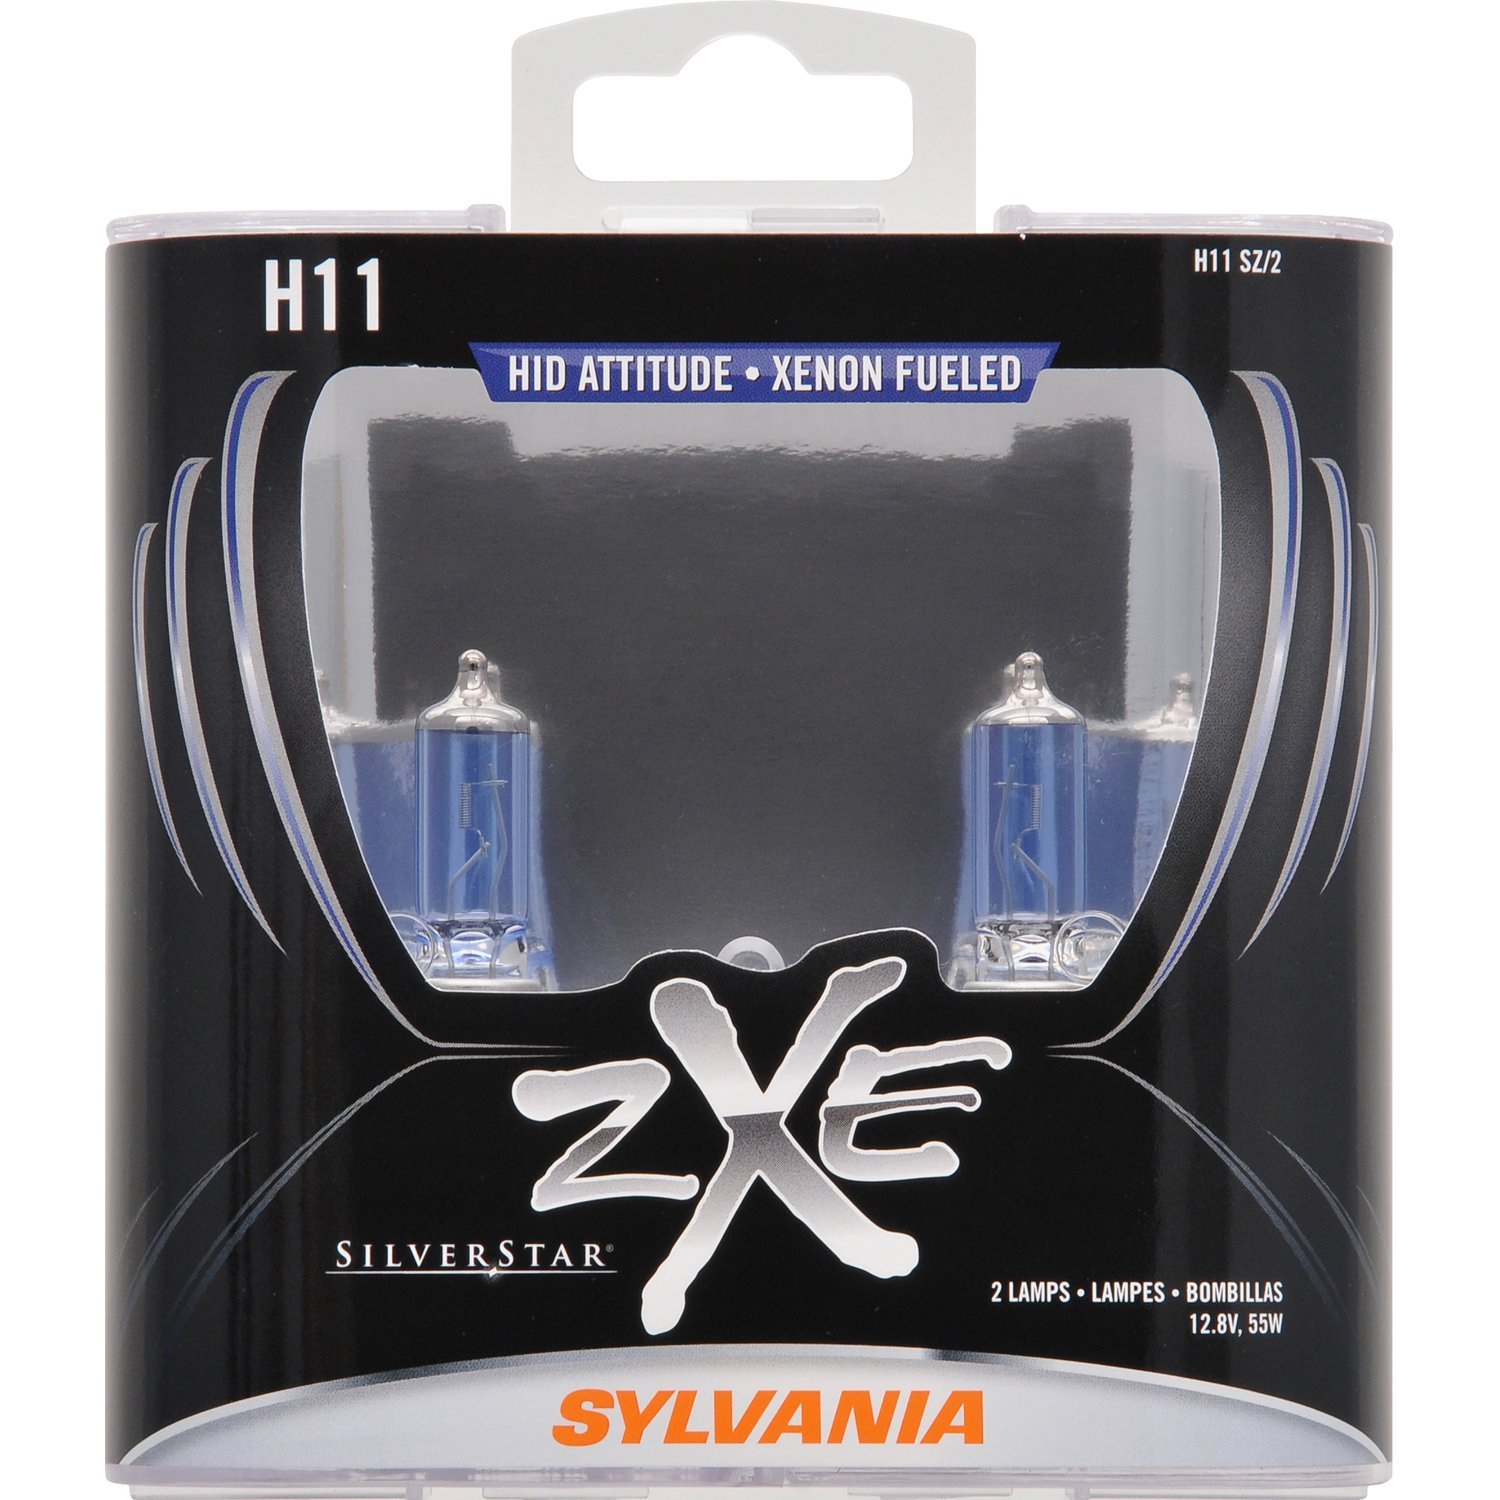 Sylvania H11 Silverstar zXe High-Performance Halogen Headlight Bulbs